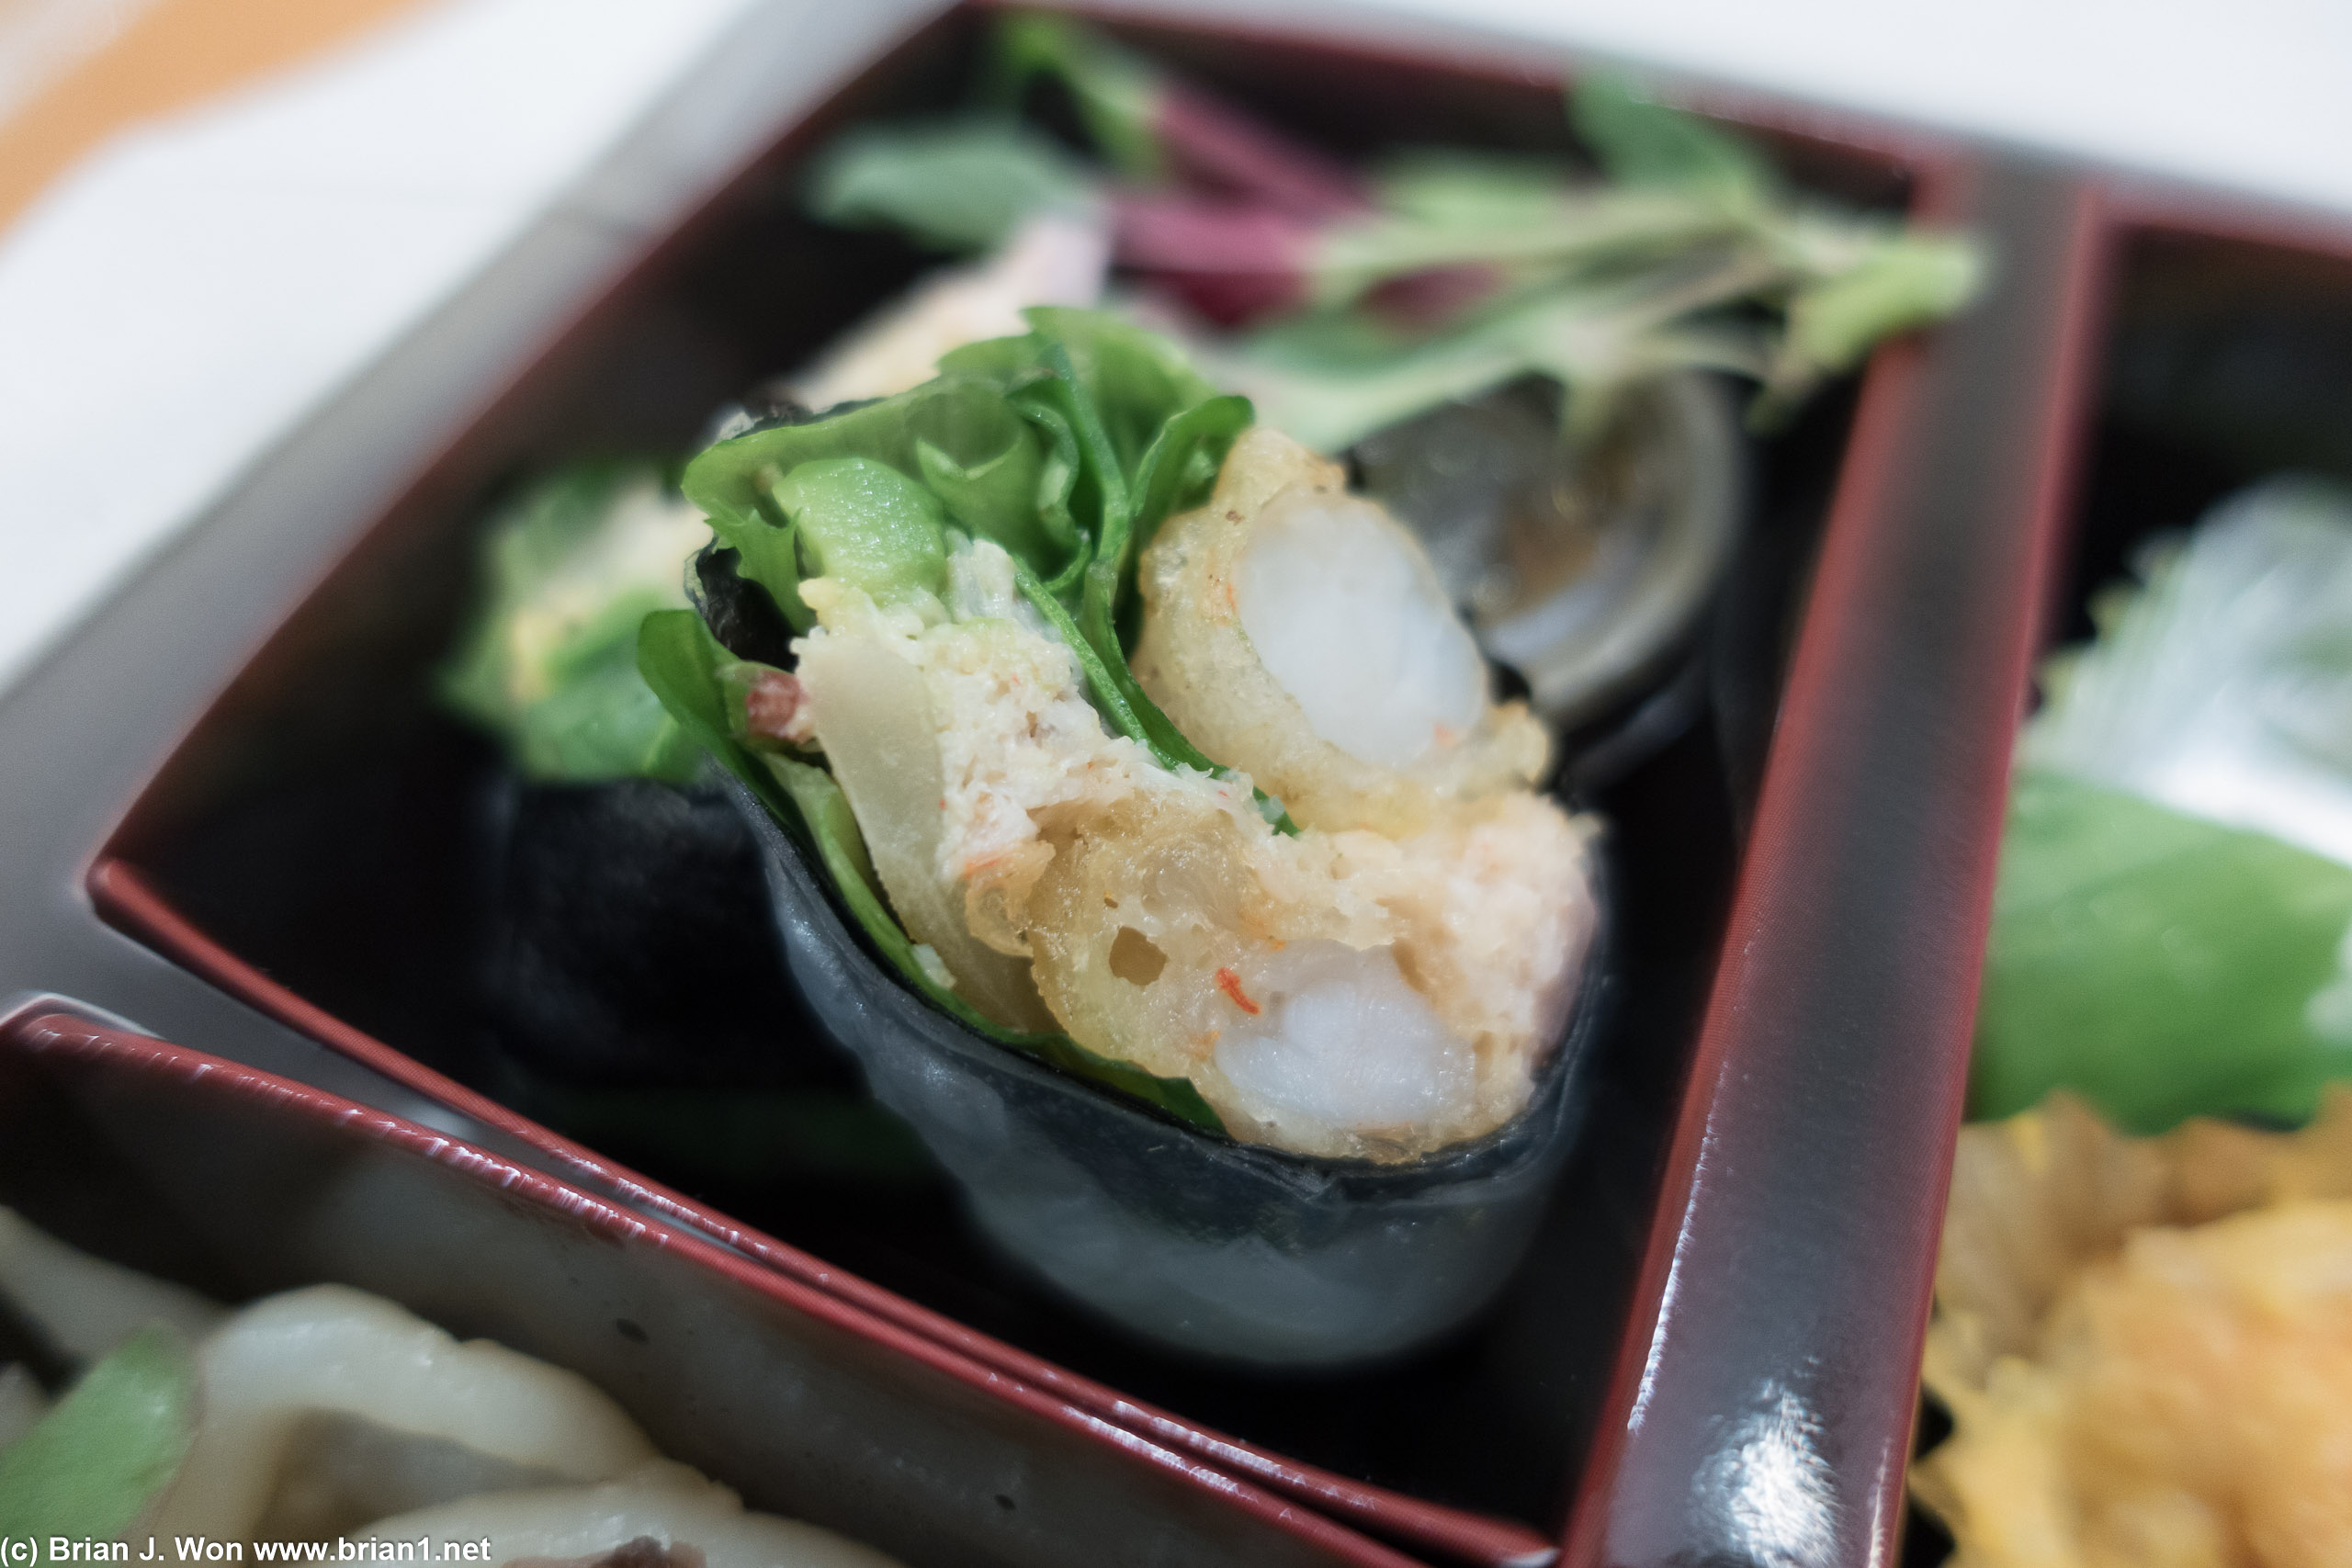 Shrimp tempura spring roll with celtuce.